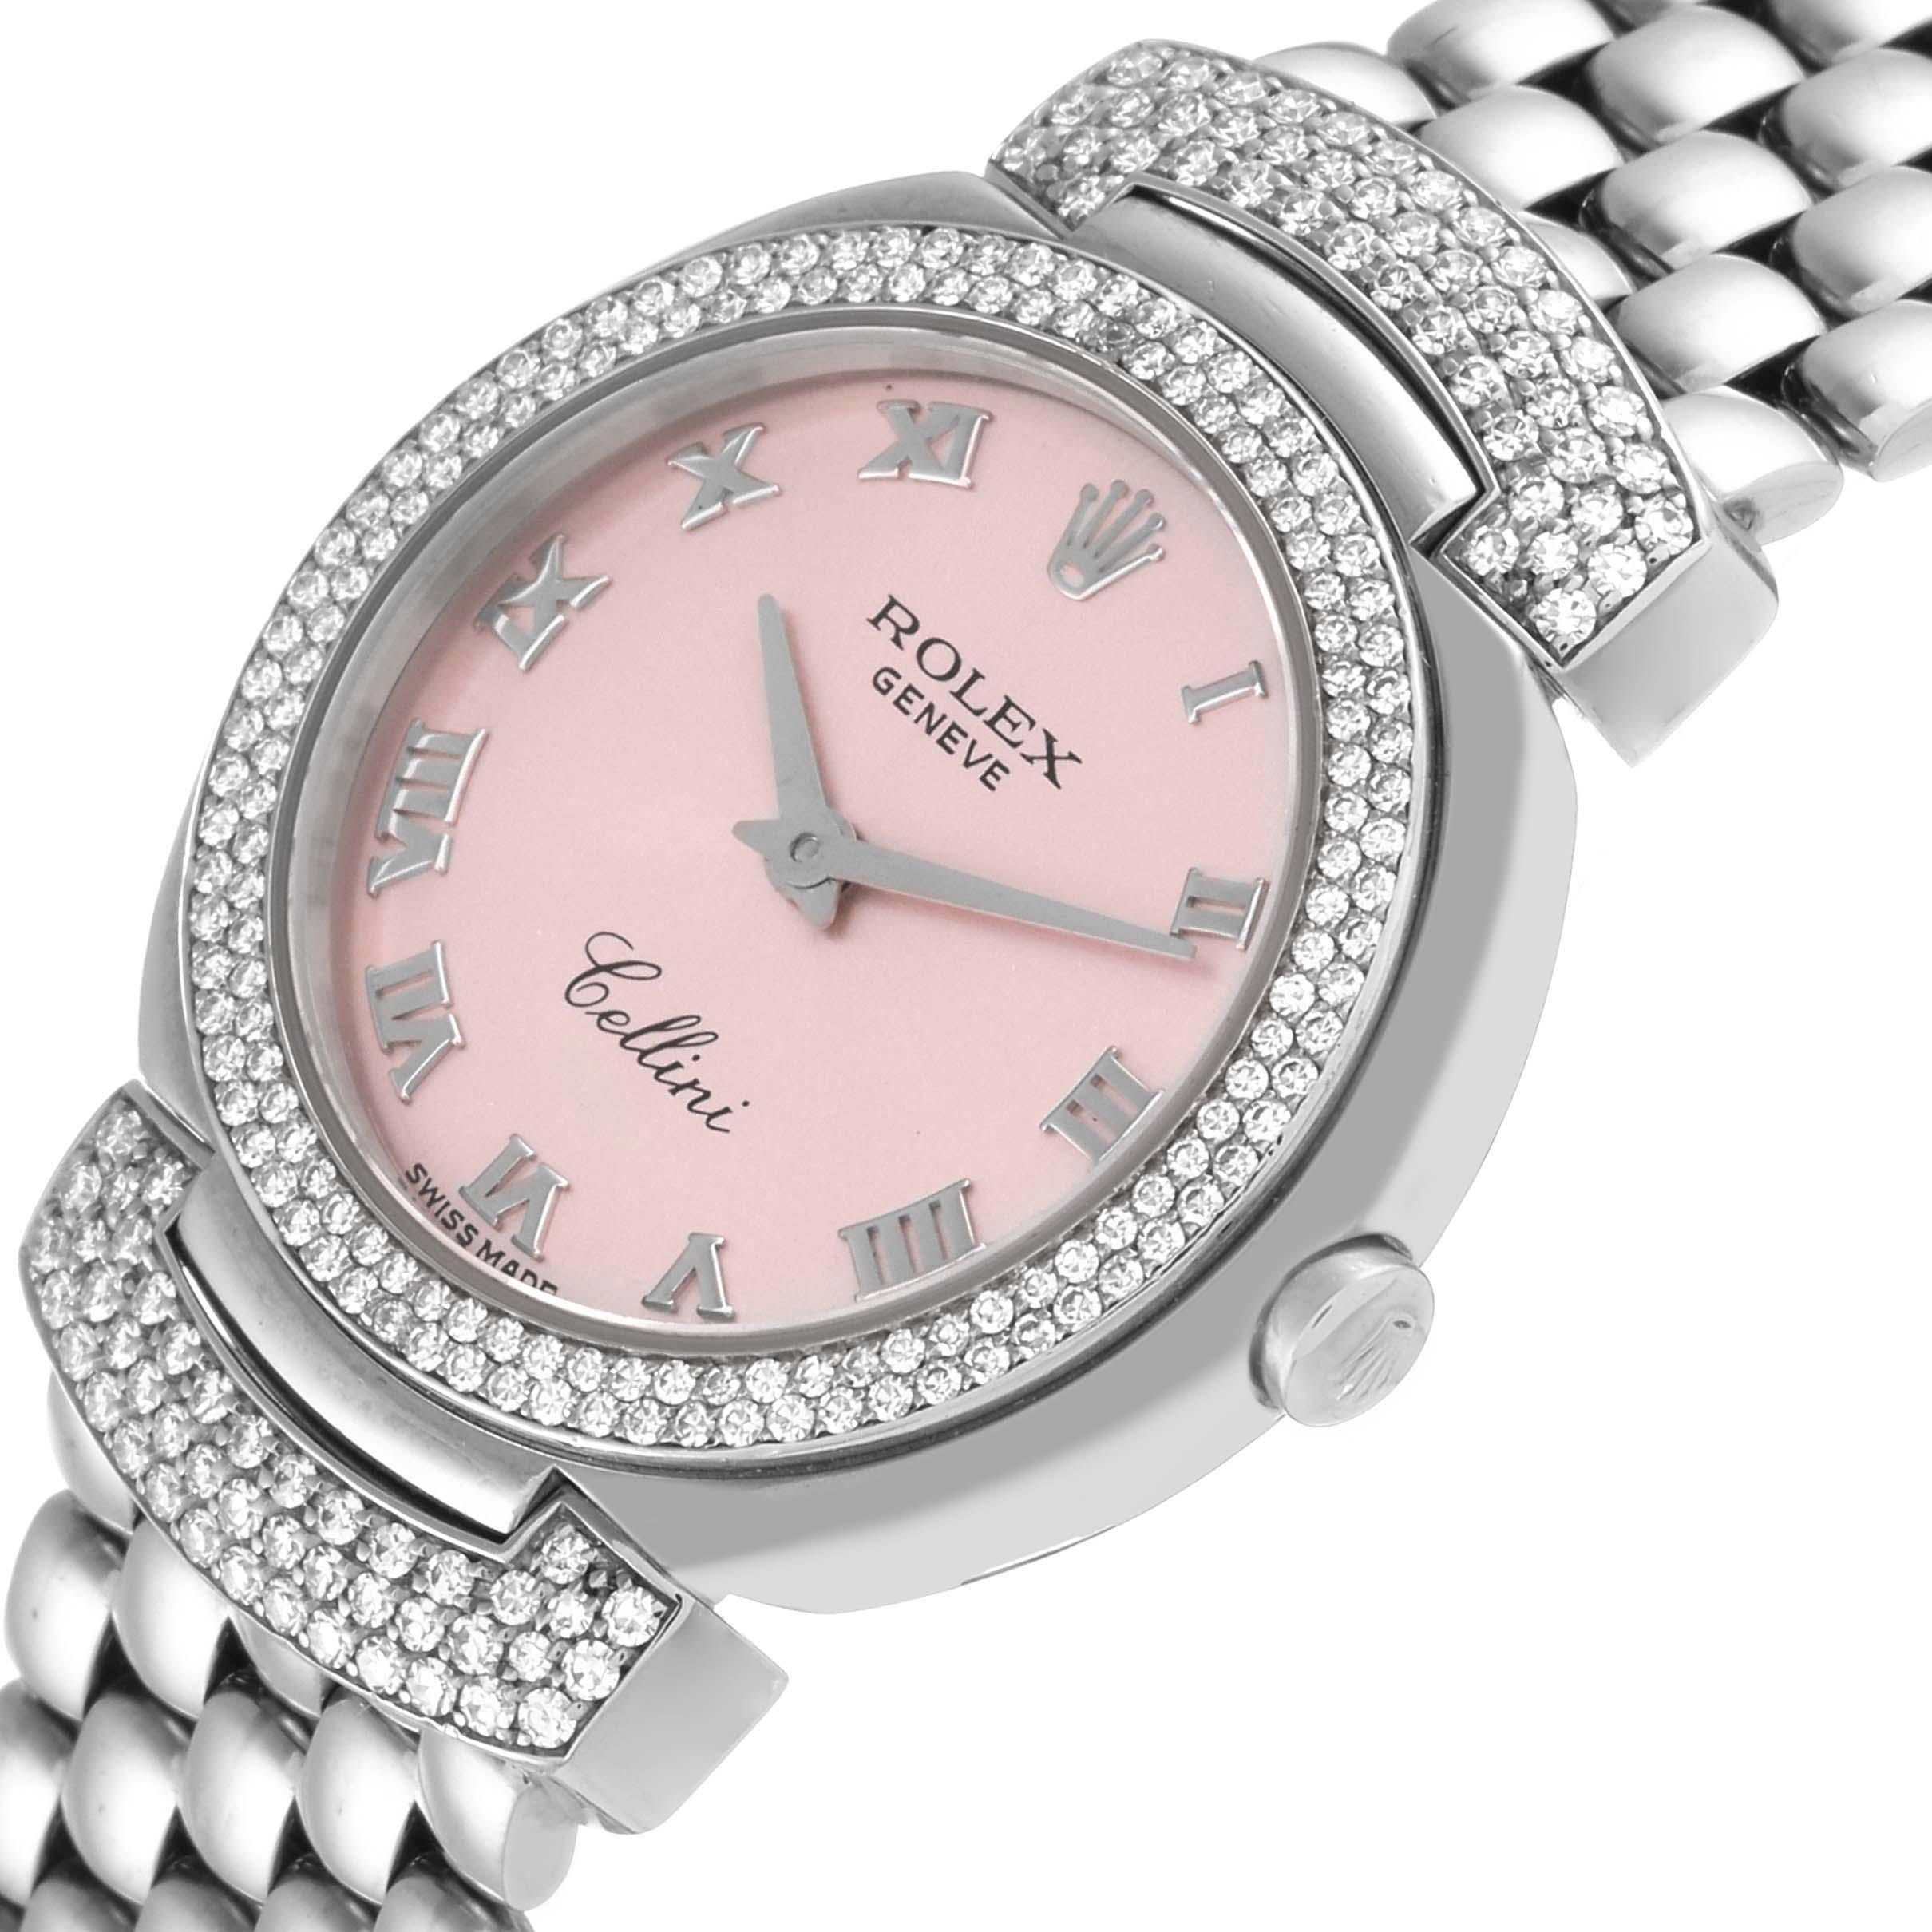 Rolex Cellini Cellissima White Gold Pink Dial Diamond Ladies Watch 6673 1